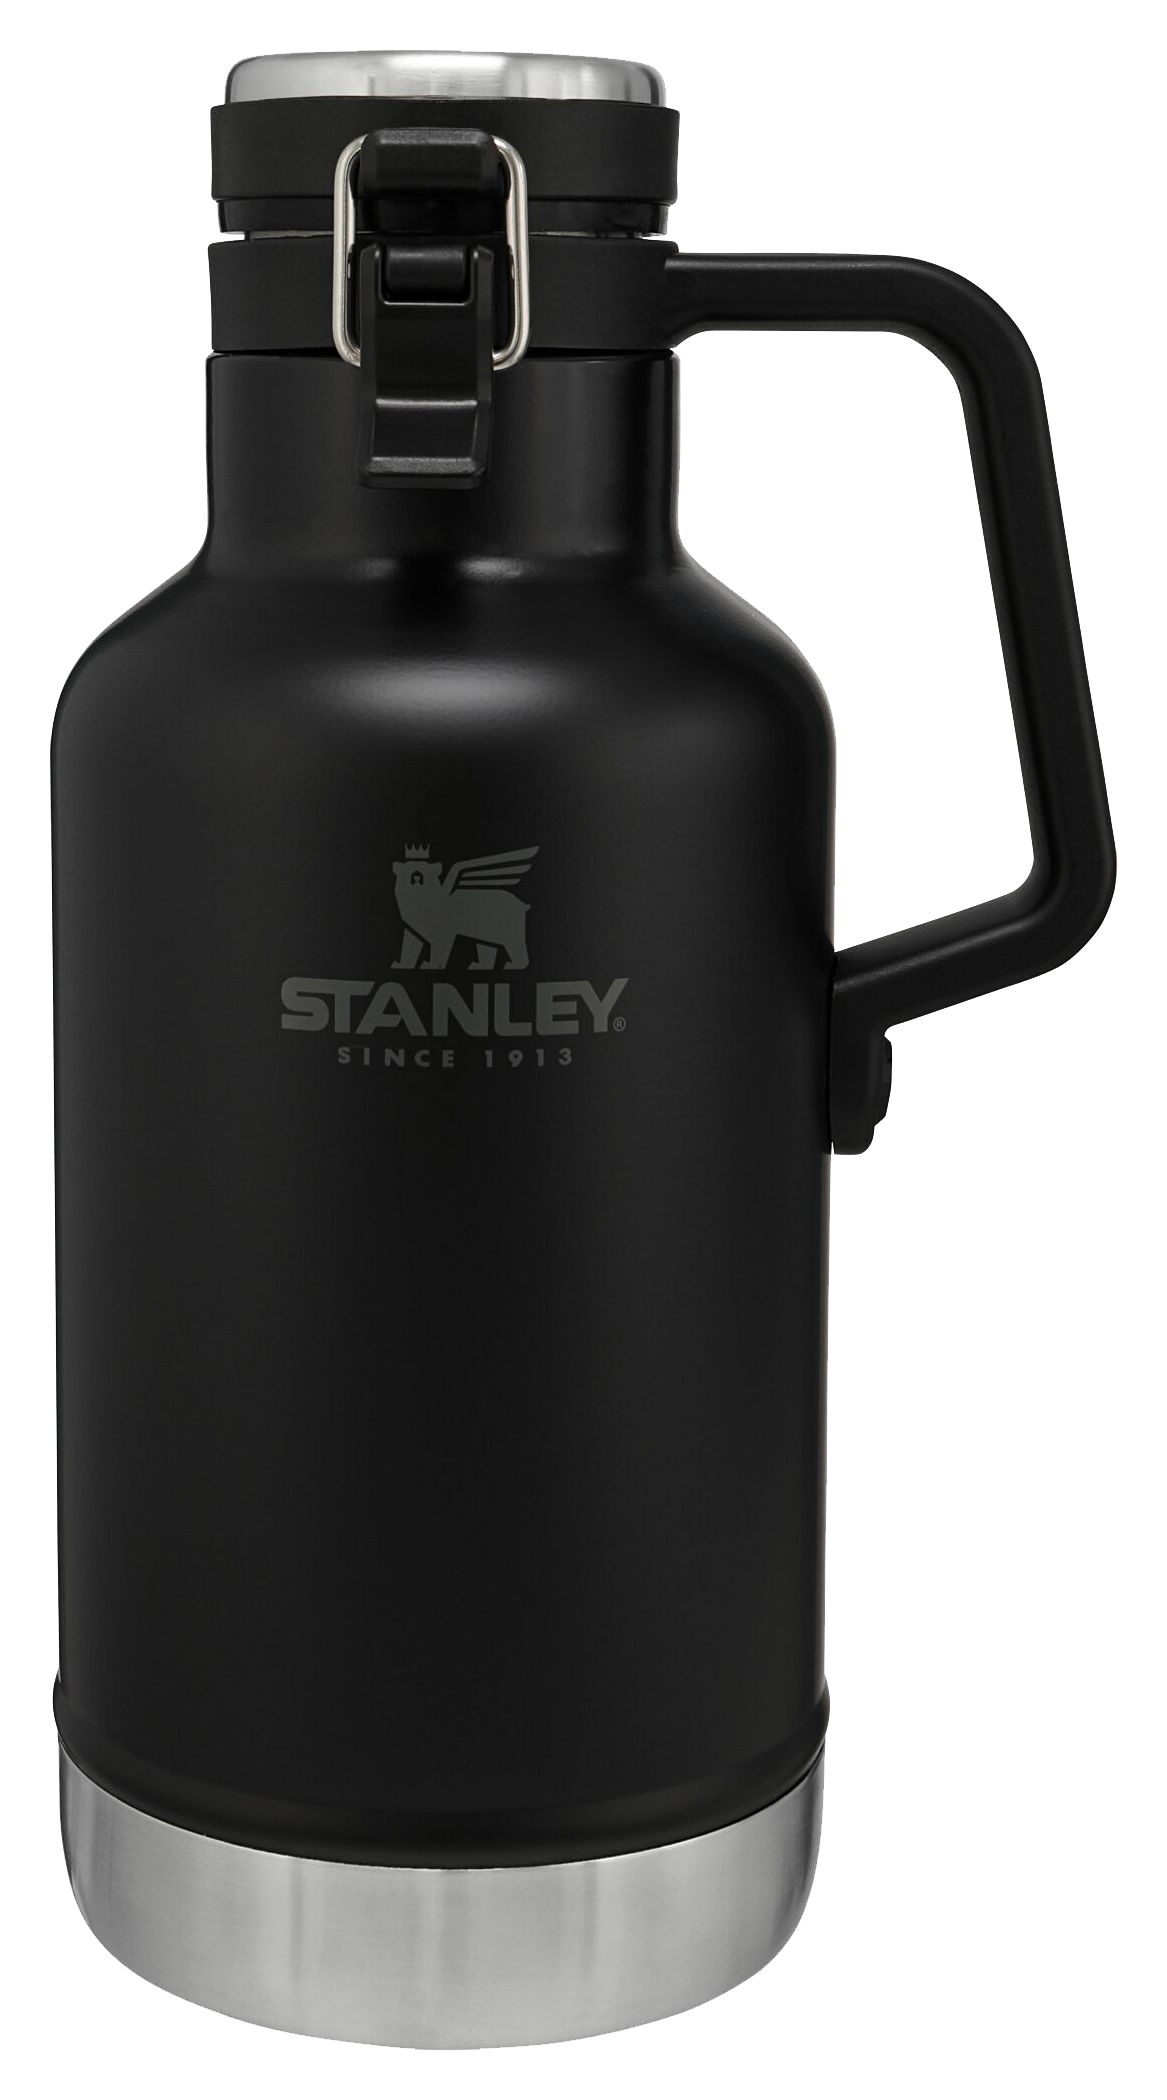 Stanley 16 oz Classic Trigger-Action Travel Mug - 10-06439-325